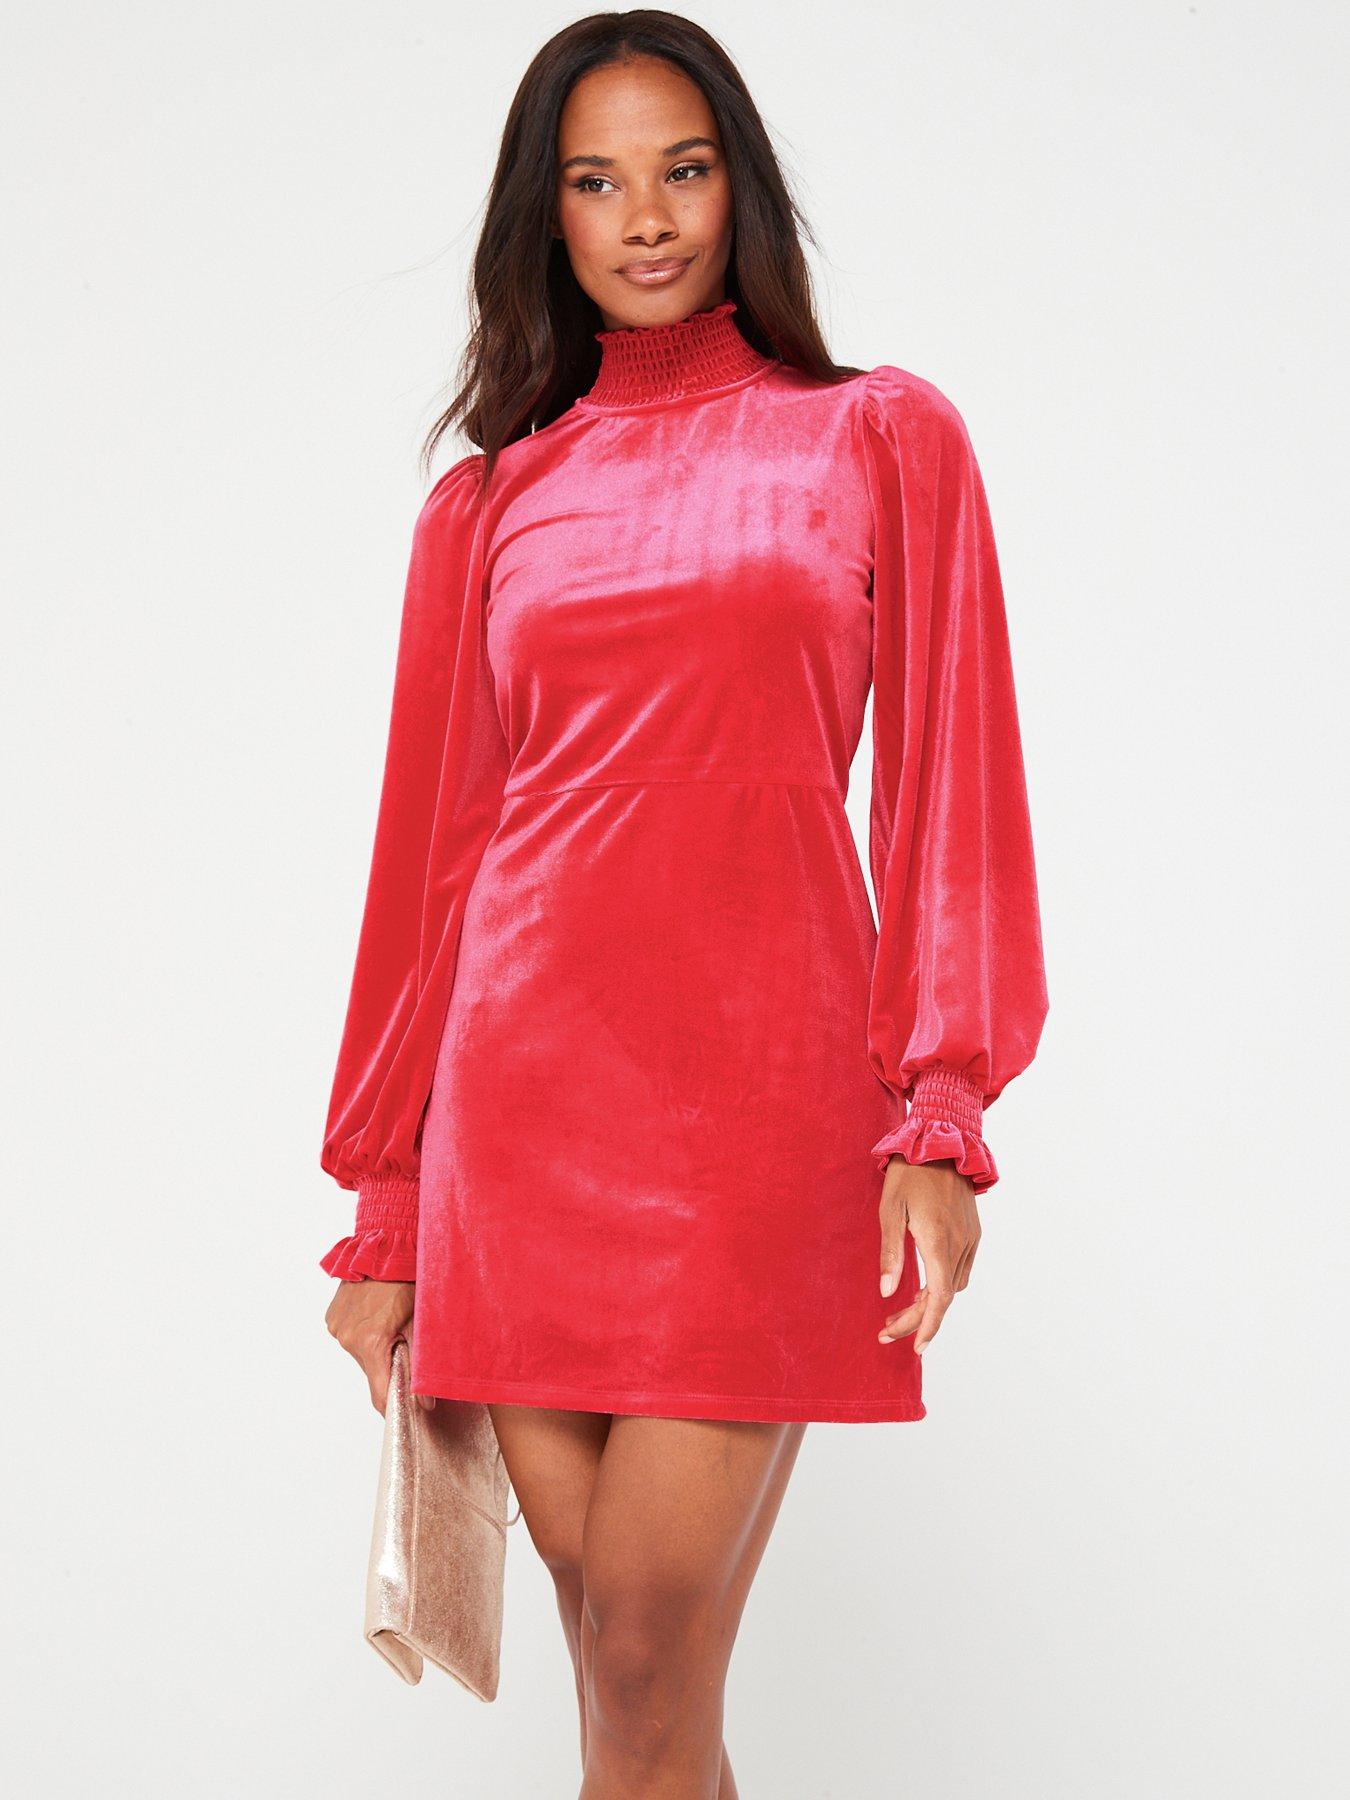 Red Dress Pink Fuchsia Velvet Long Sleeve Mini Bodycon Dress - Medium